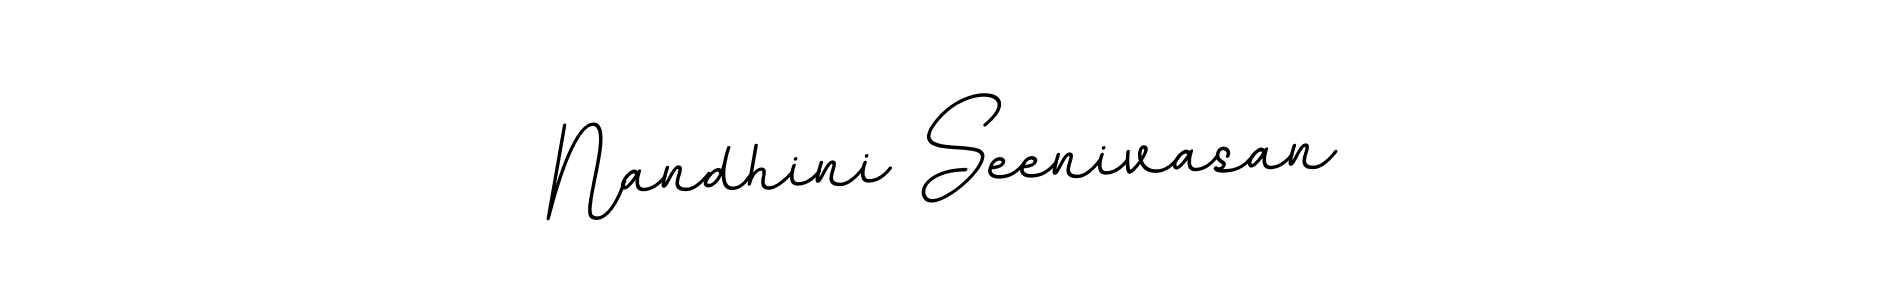 How to Draw Nandhini Seenivasan signature style? BallpointsItalic-DORy9 is a latest design signature styles for name Nandhini Seenivasan. Nandhini Seenivasan signature style 11 images and pictures png